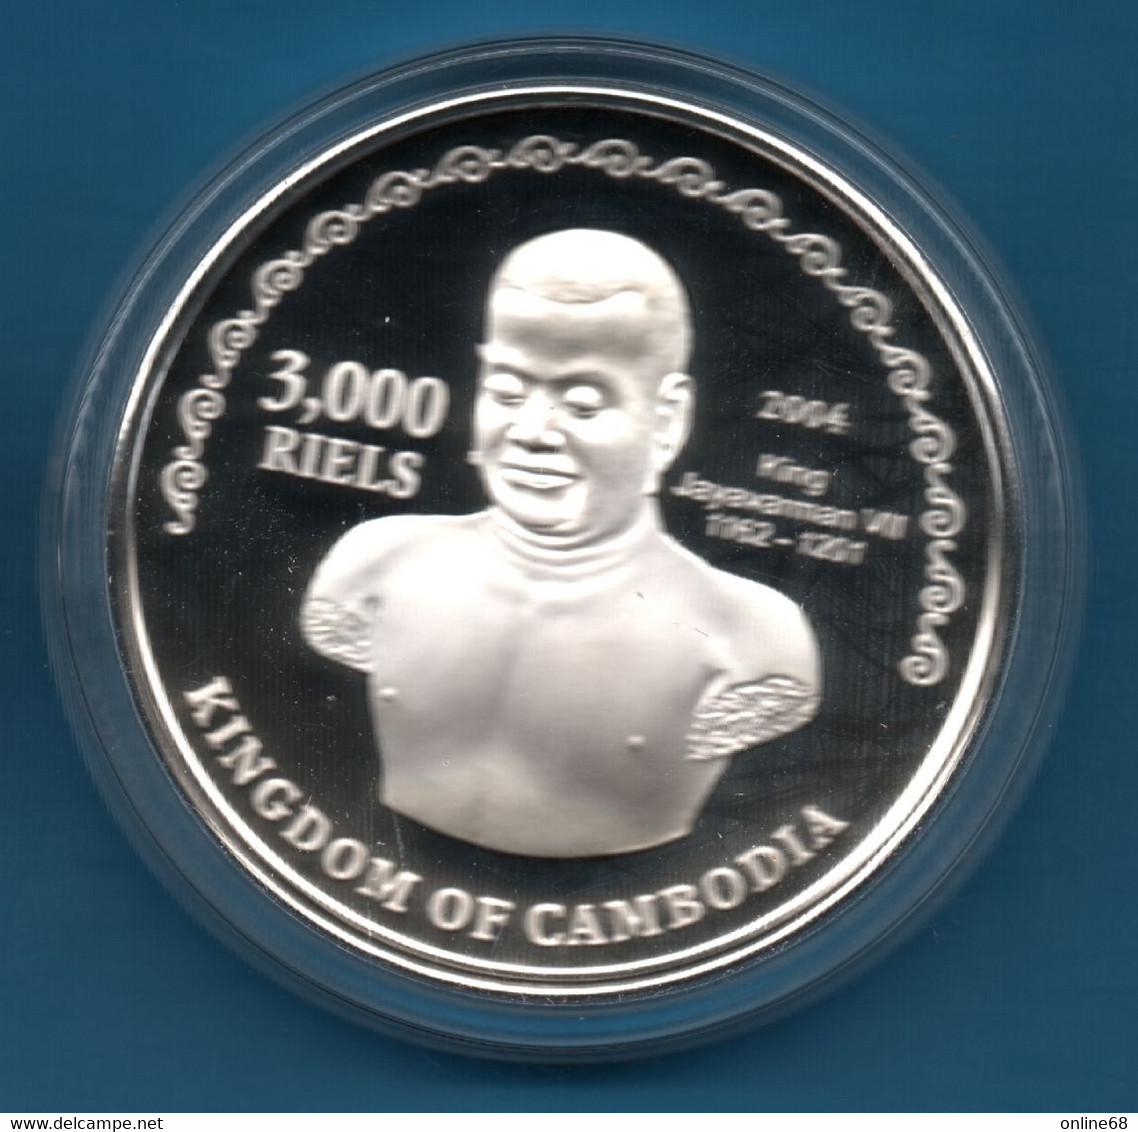 CAMBODIA 3000 RIELS 2004 KM# 139 Silver .999 Argent 2006 FOOTBALL World Cup KING JAYAVAIMAN VII - Cambodge